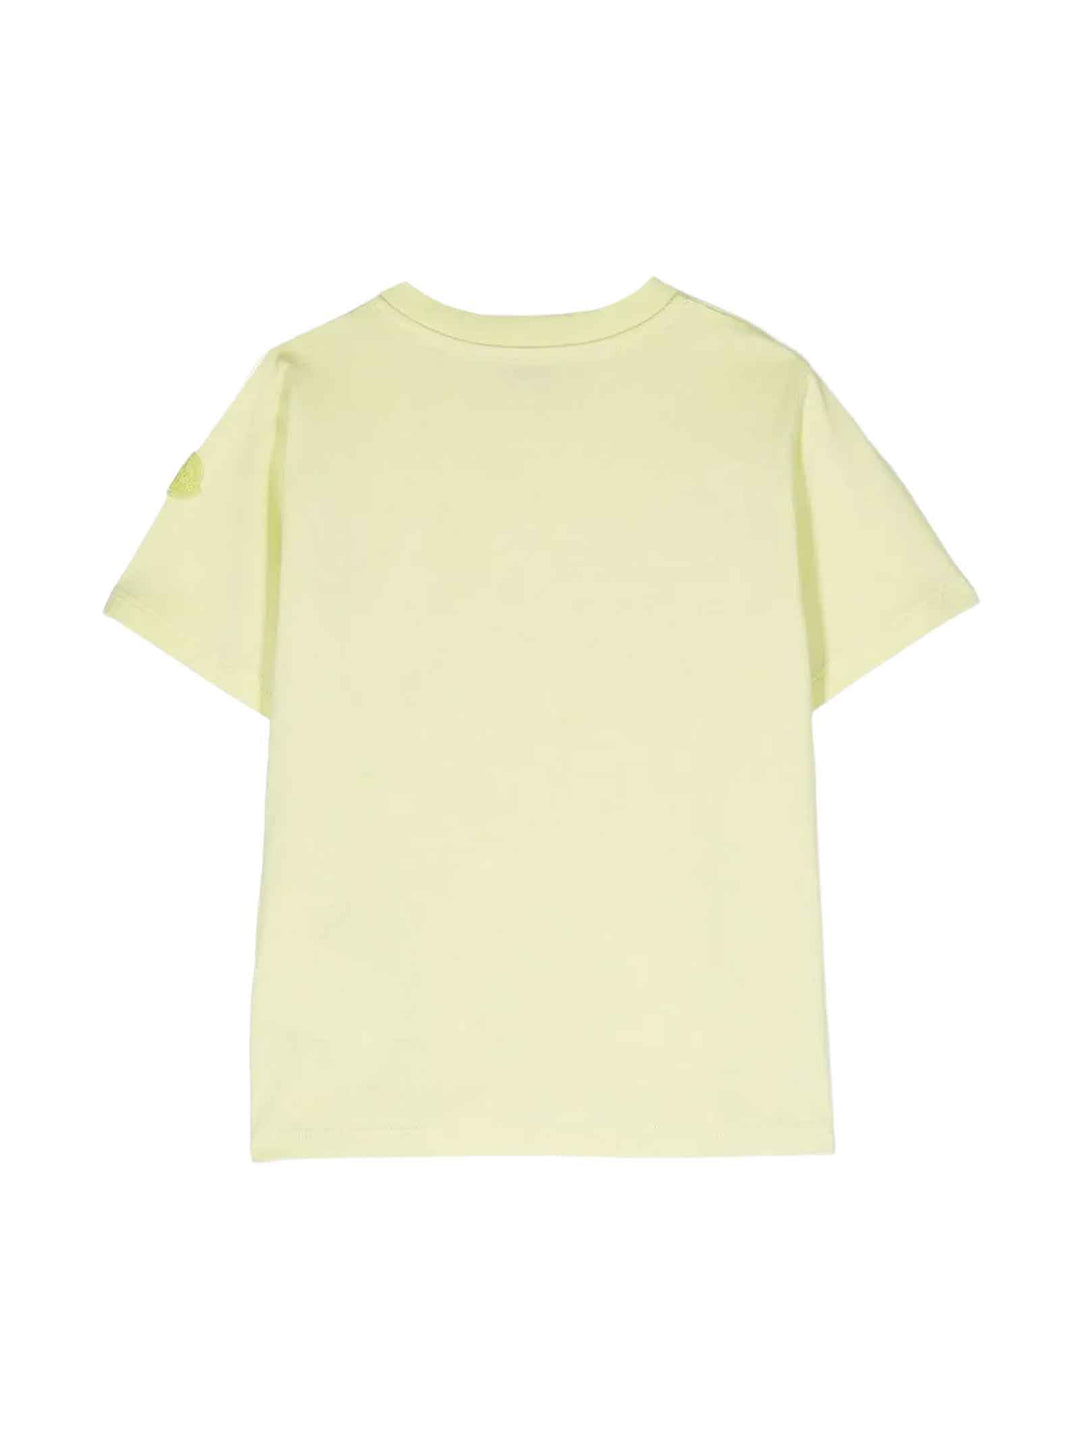 T-shirt lime unisex